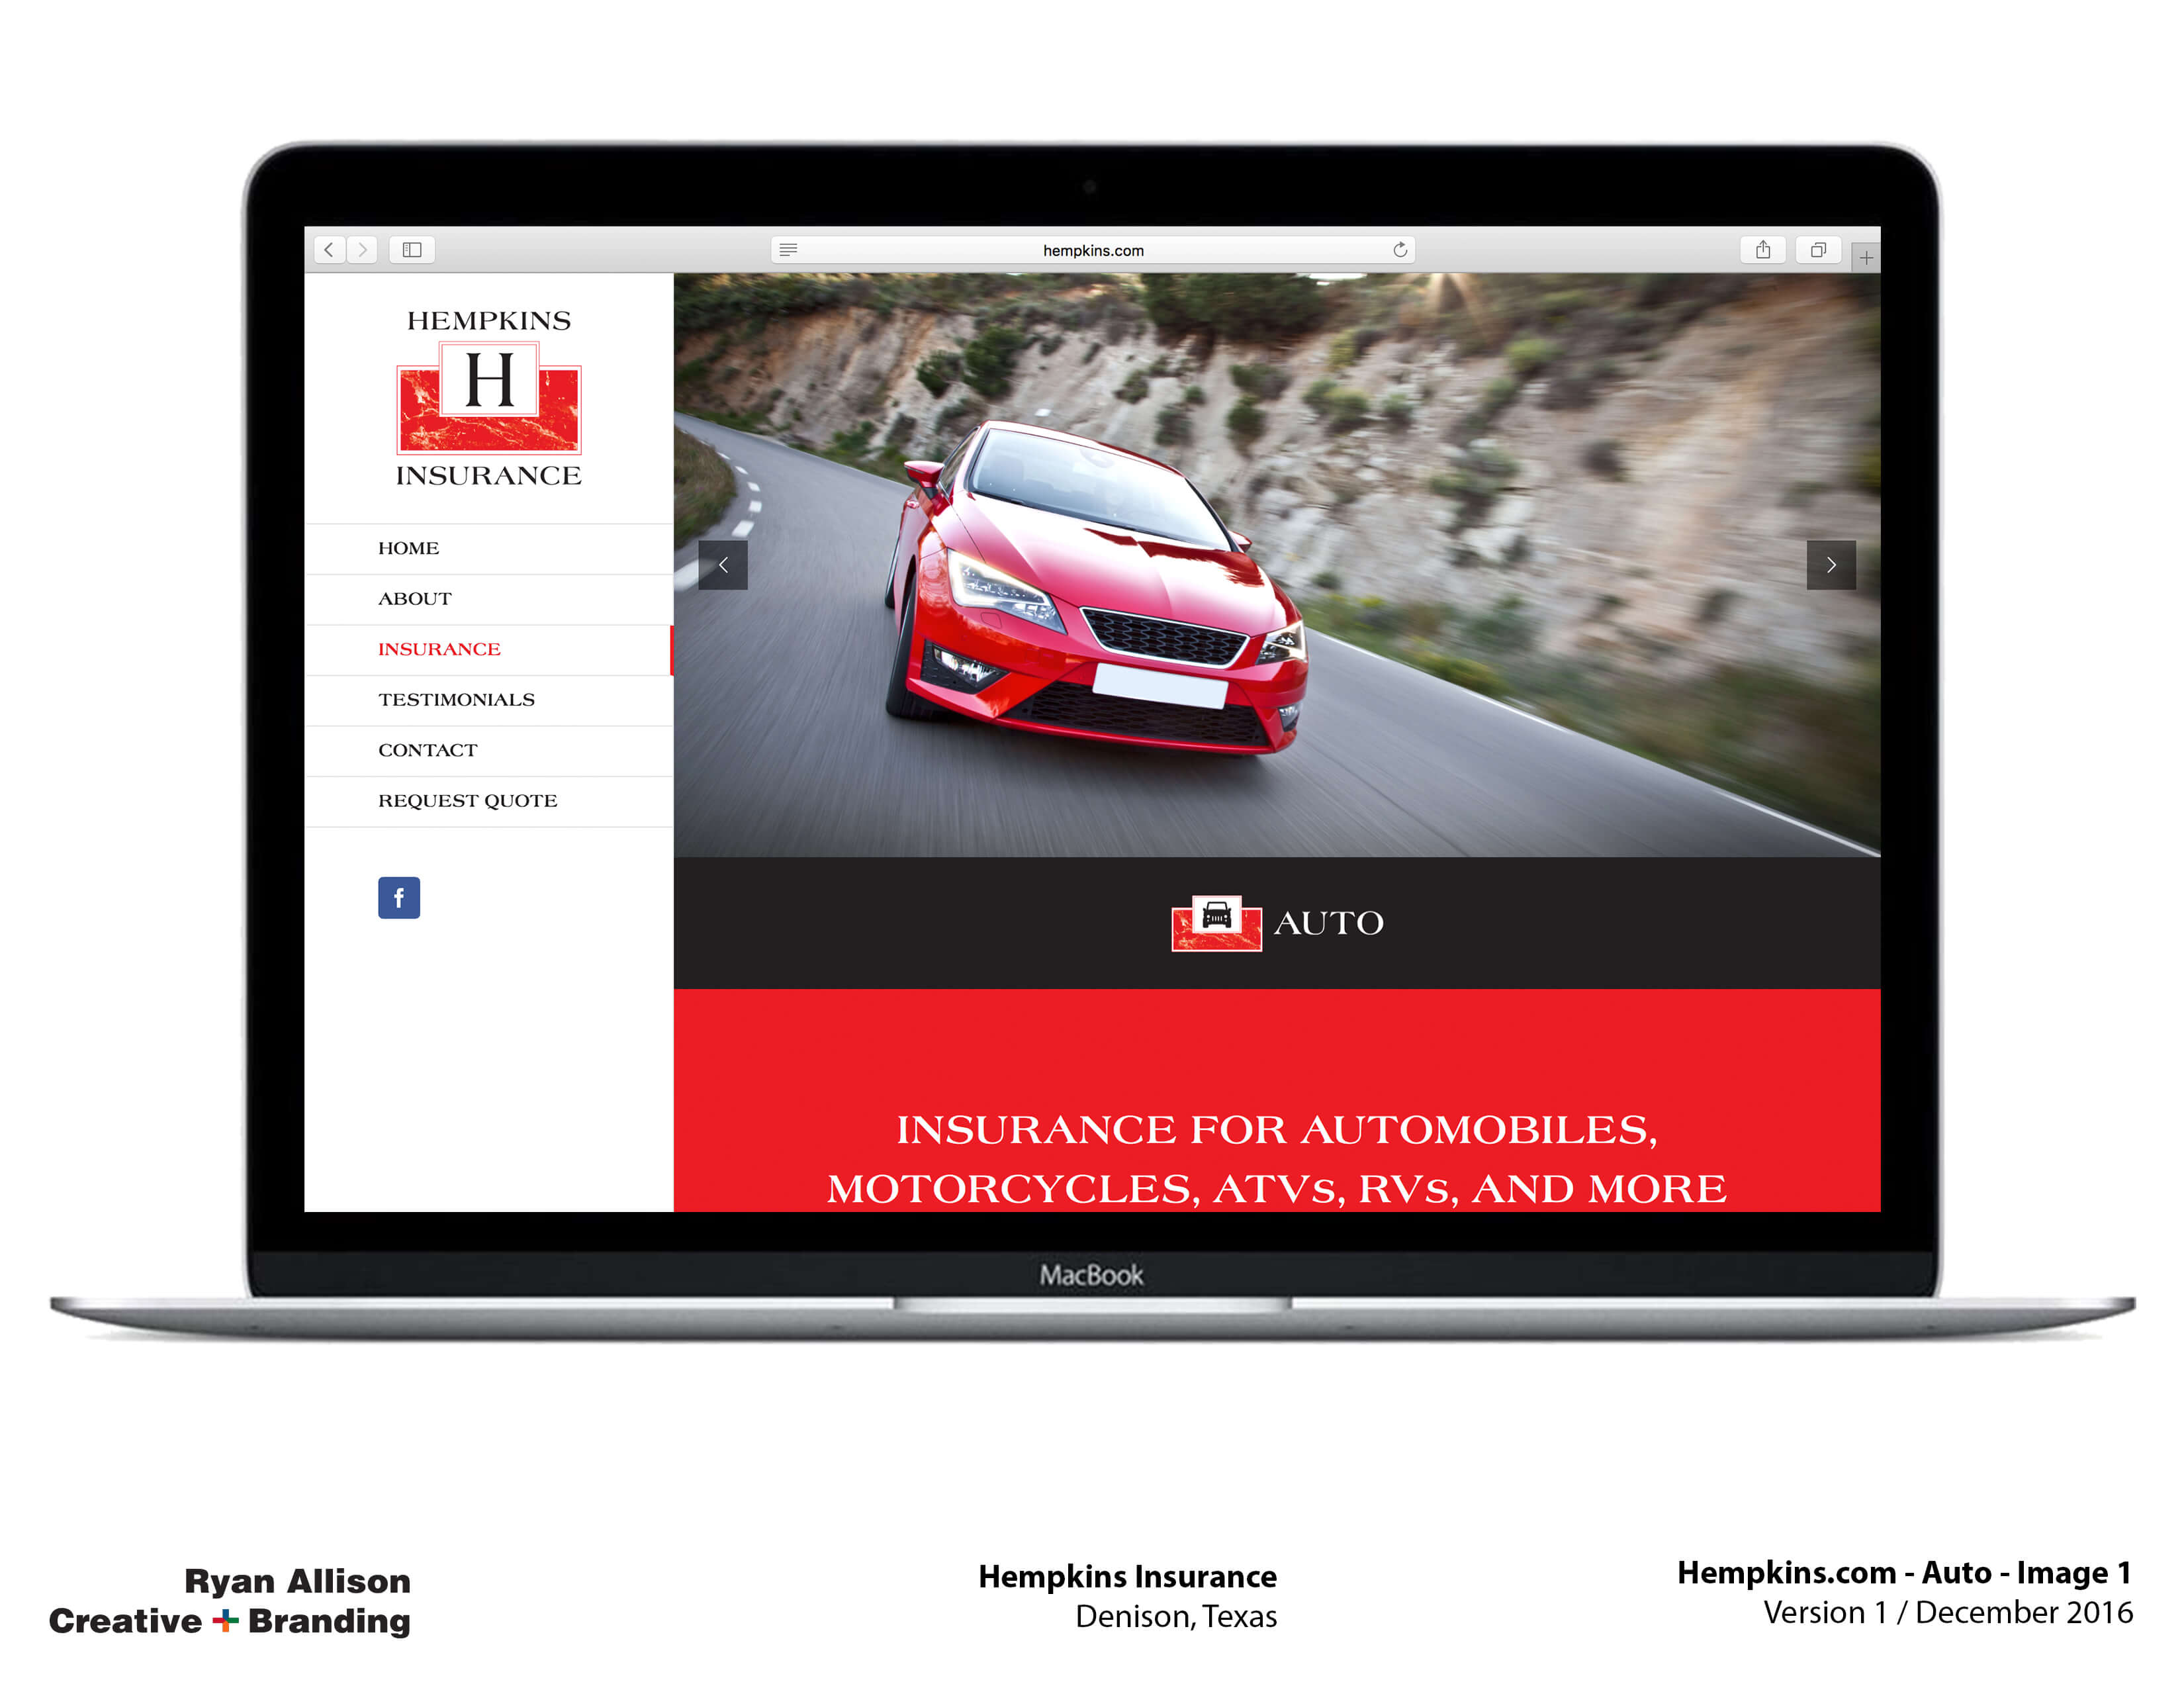 Hempkins Insurance Website Auto 1 - Project - Ryan Allison Creative + Branding